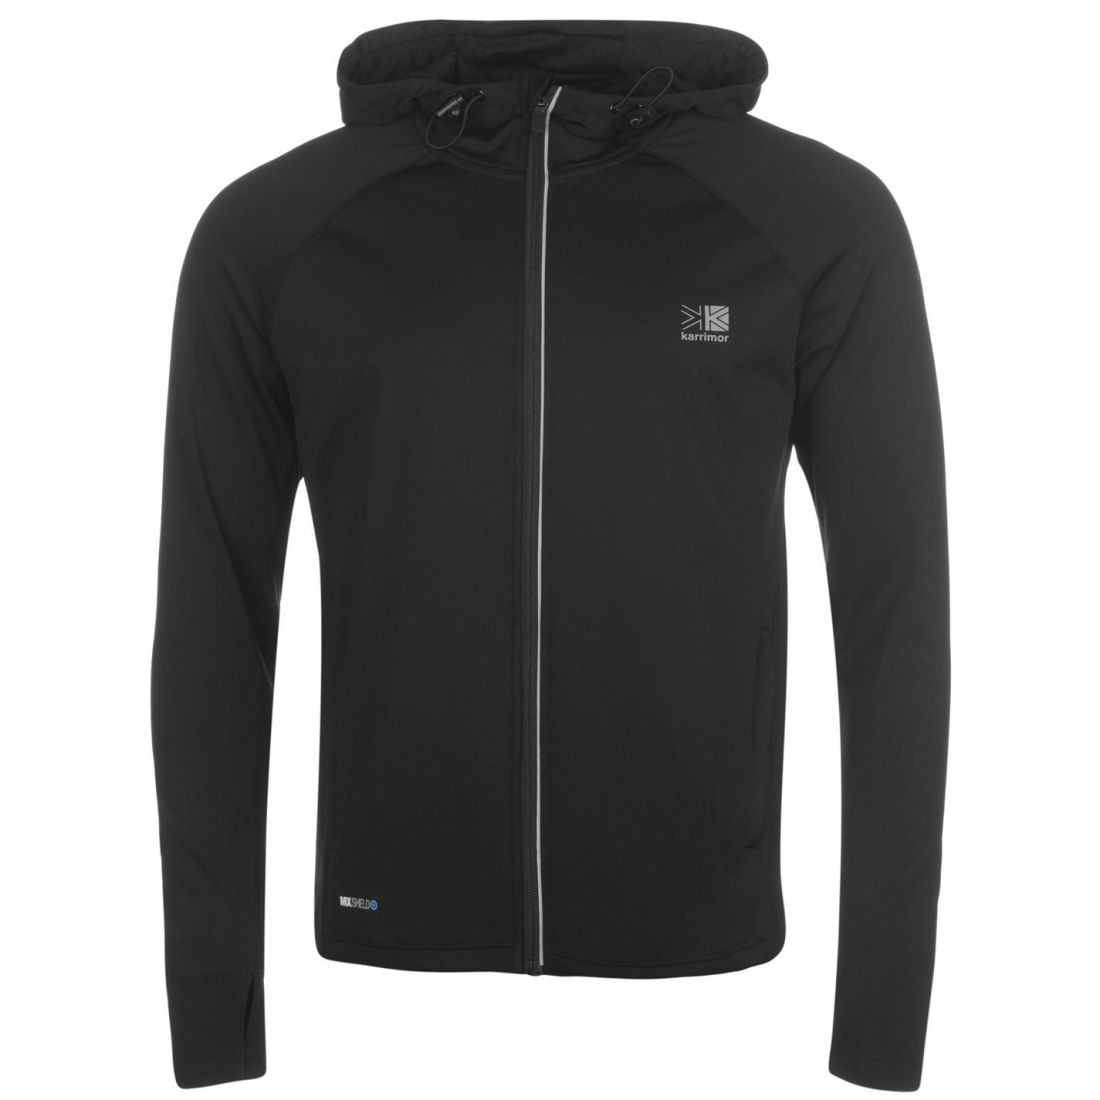 Karrimor Xlite MX Shield Jacket Mens Gents Performance Coat Top Hooded Zip | eBay